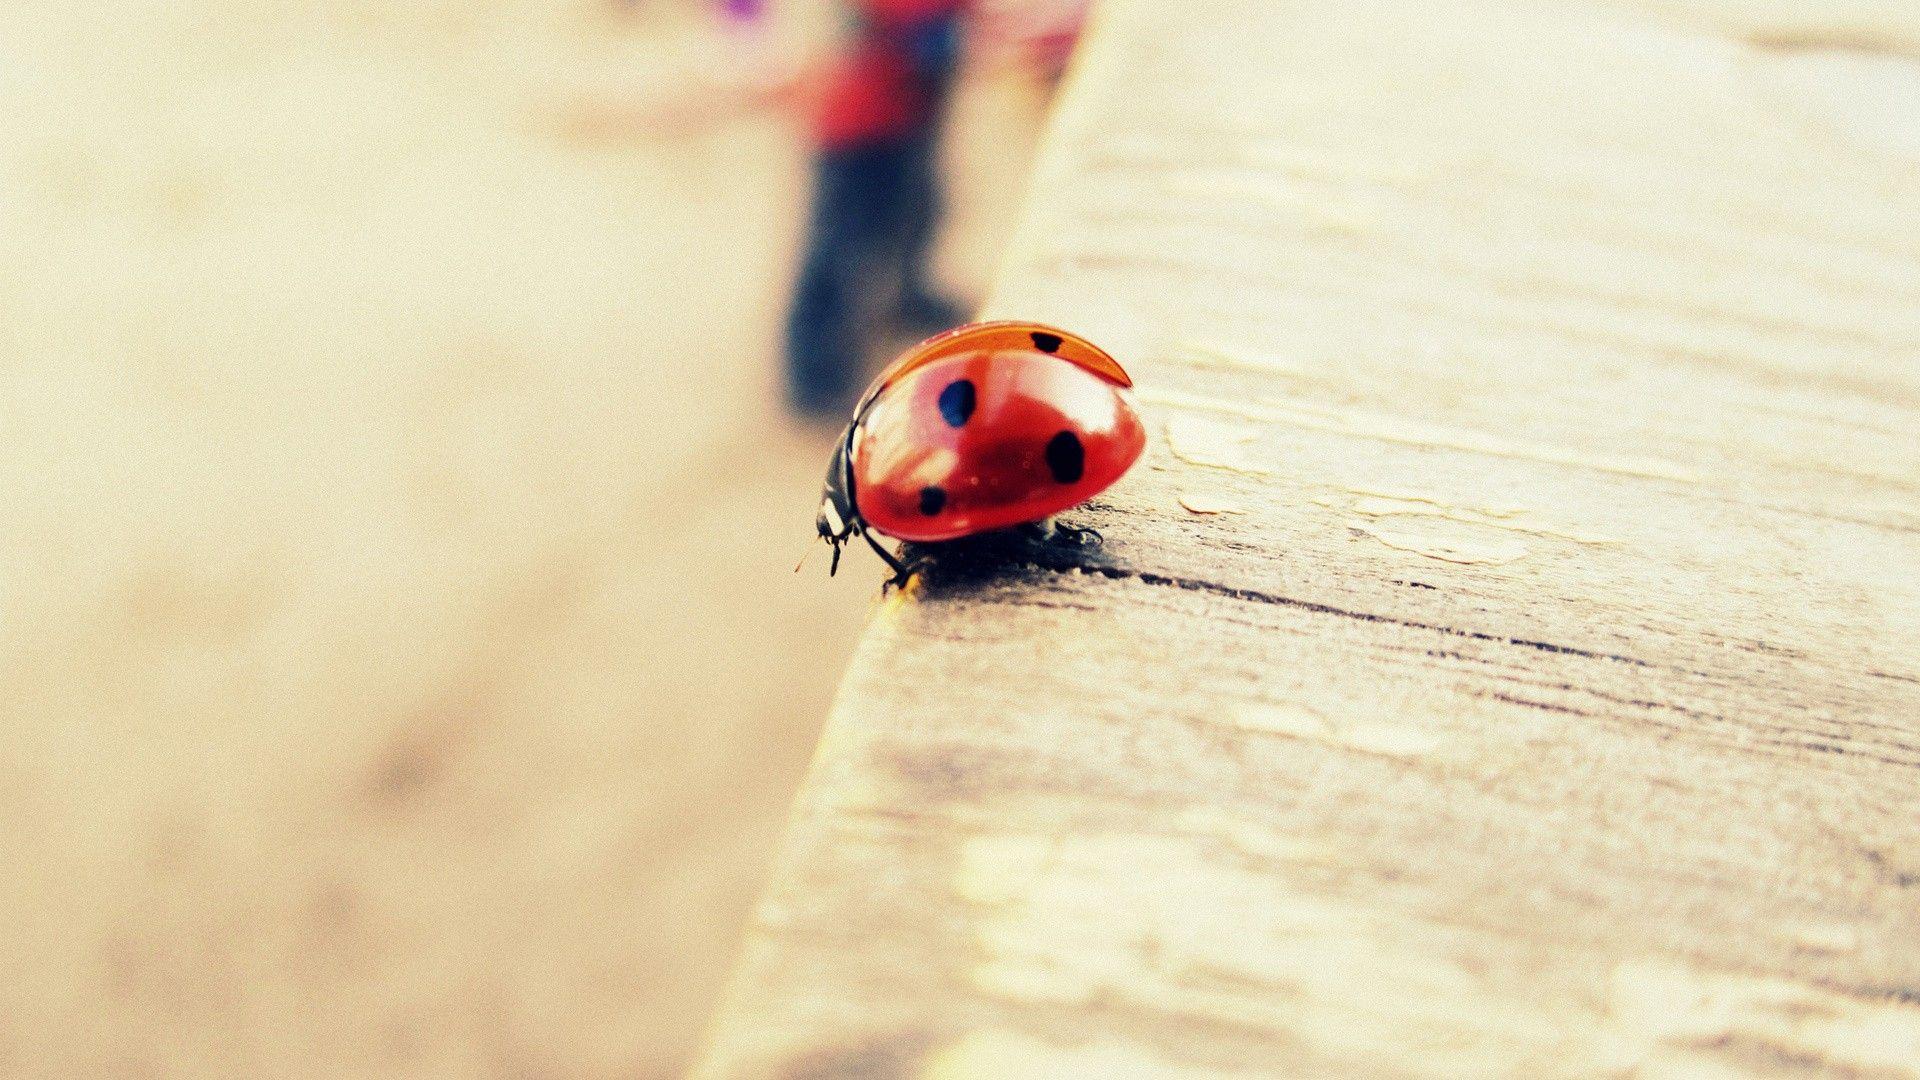 Ladybug Wallpaper, Best & Inspirational High Quality Ladybug